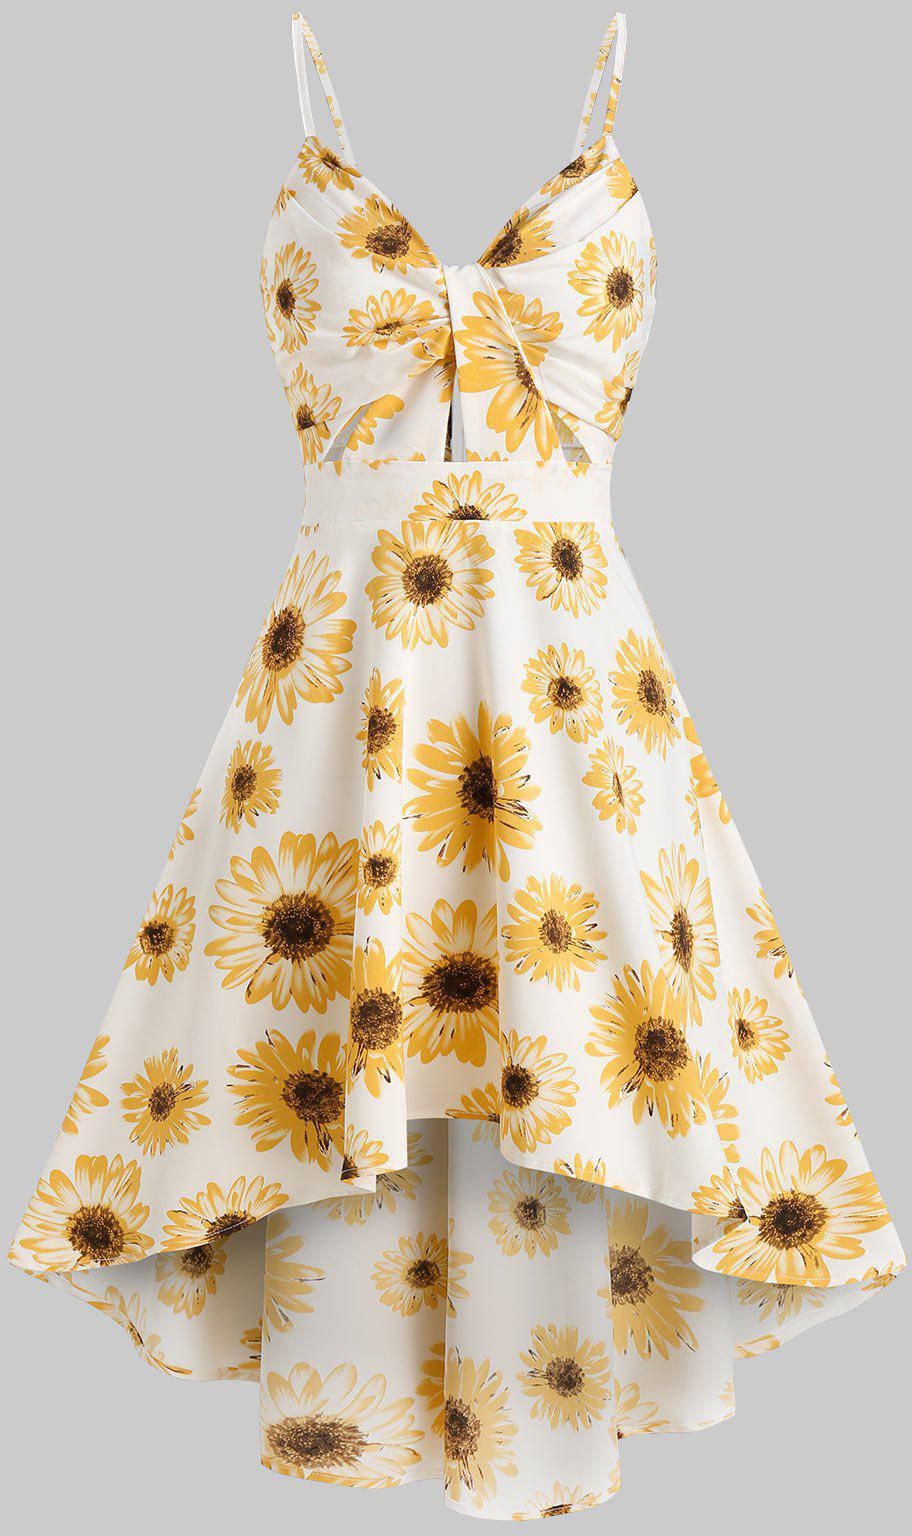 Spaghetti Strap Sunflower Print High Low Dress M price